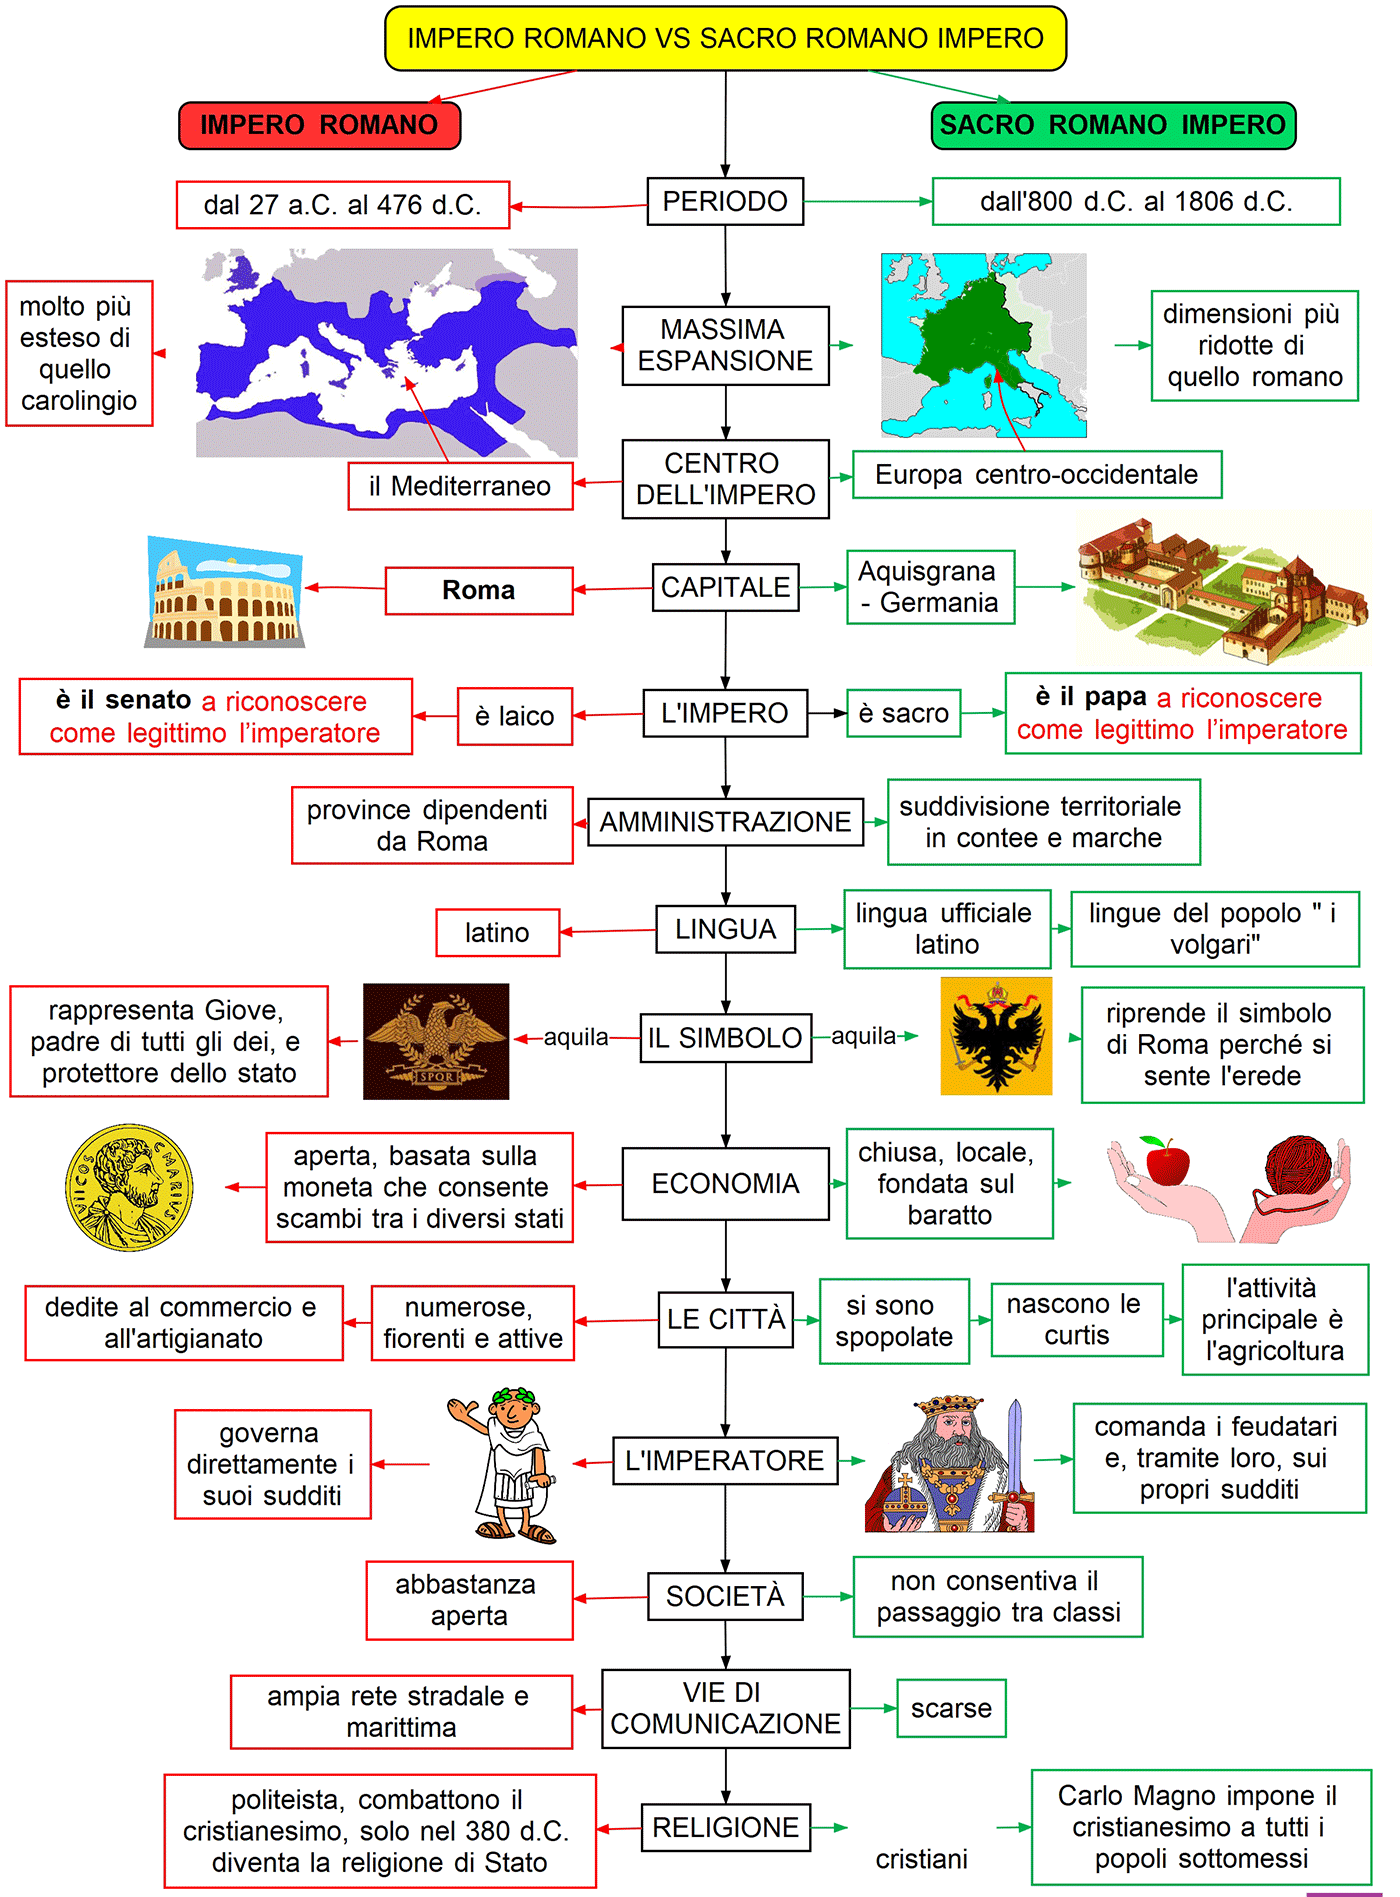 Impero romano vs Sacro romano impero